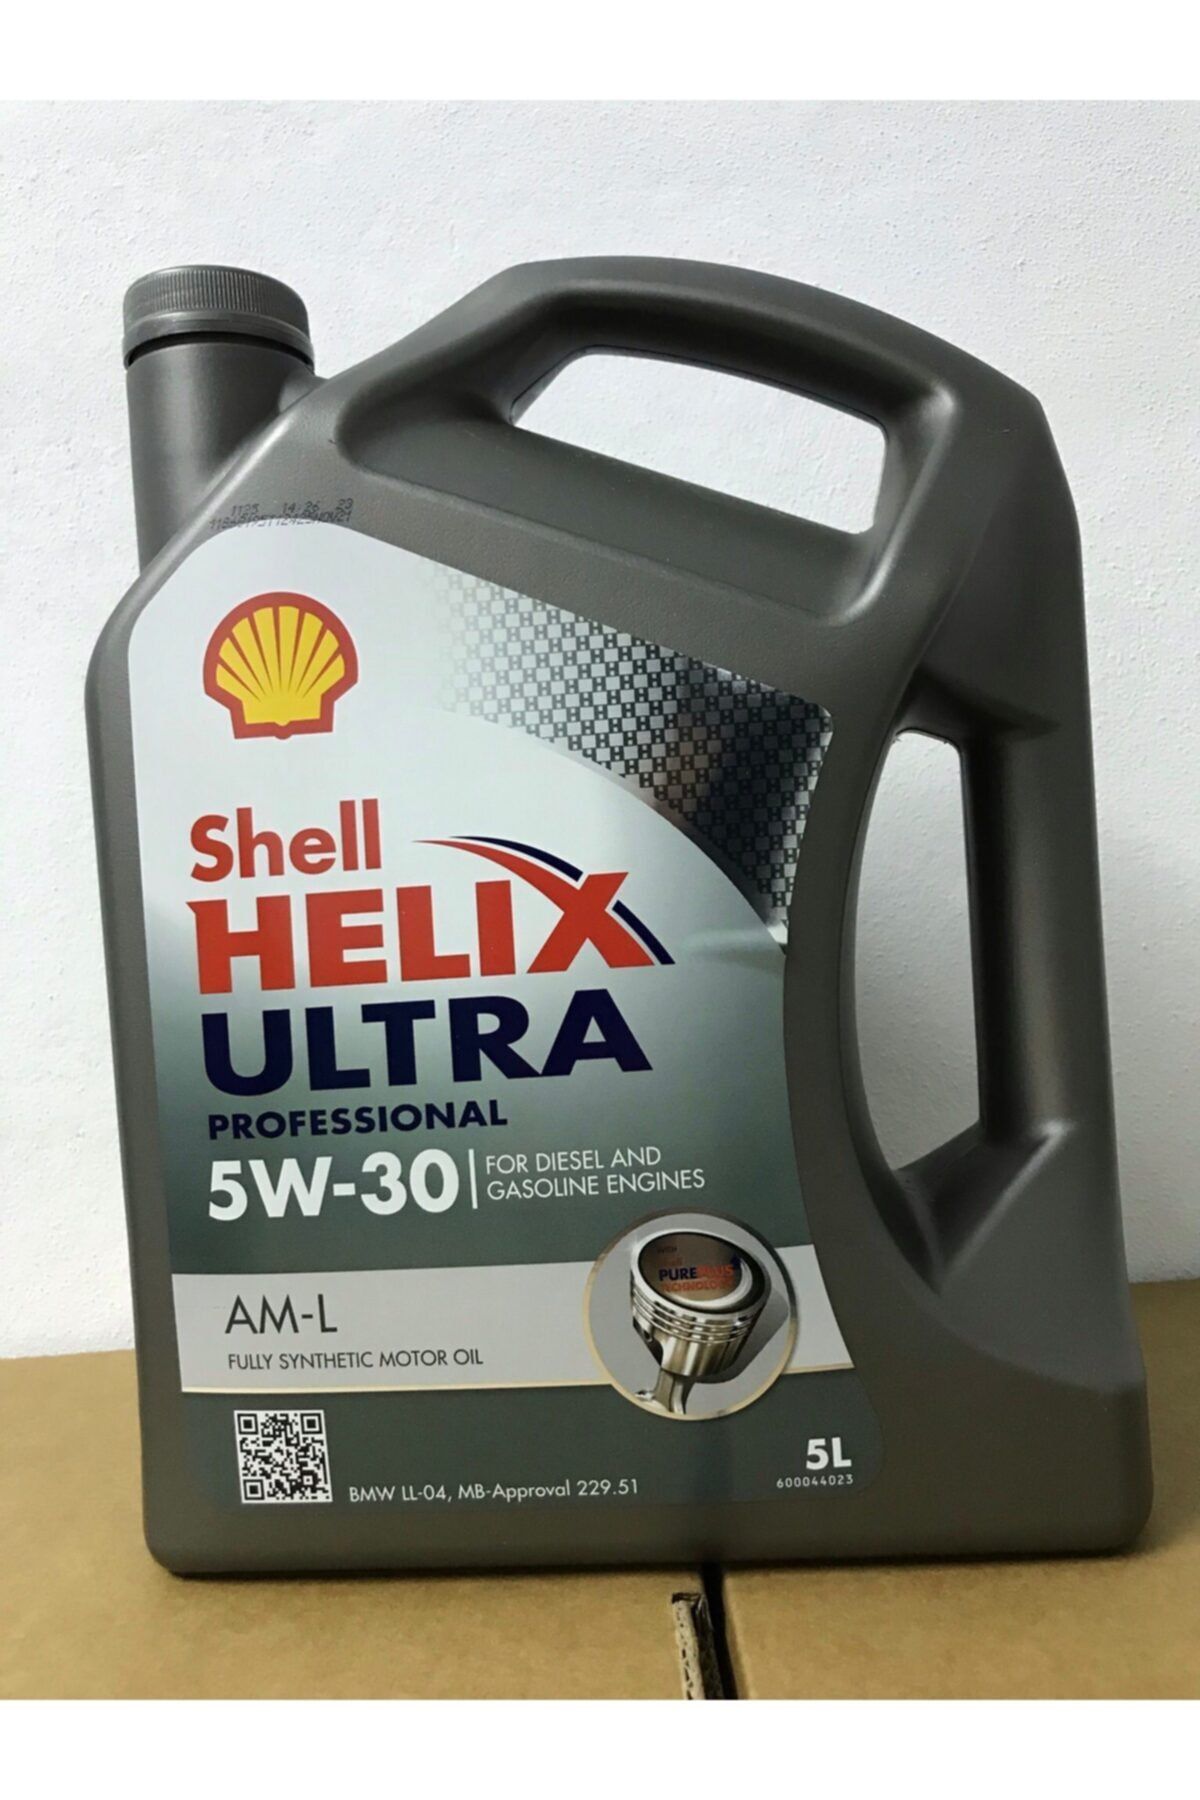 Shell Helix Ultra Pro Am-l 5w-30 (5LT)